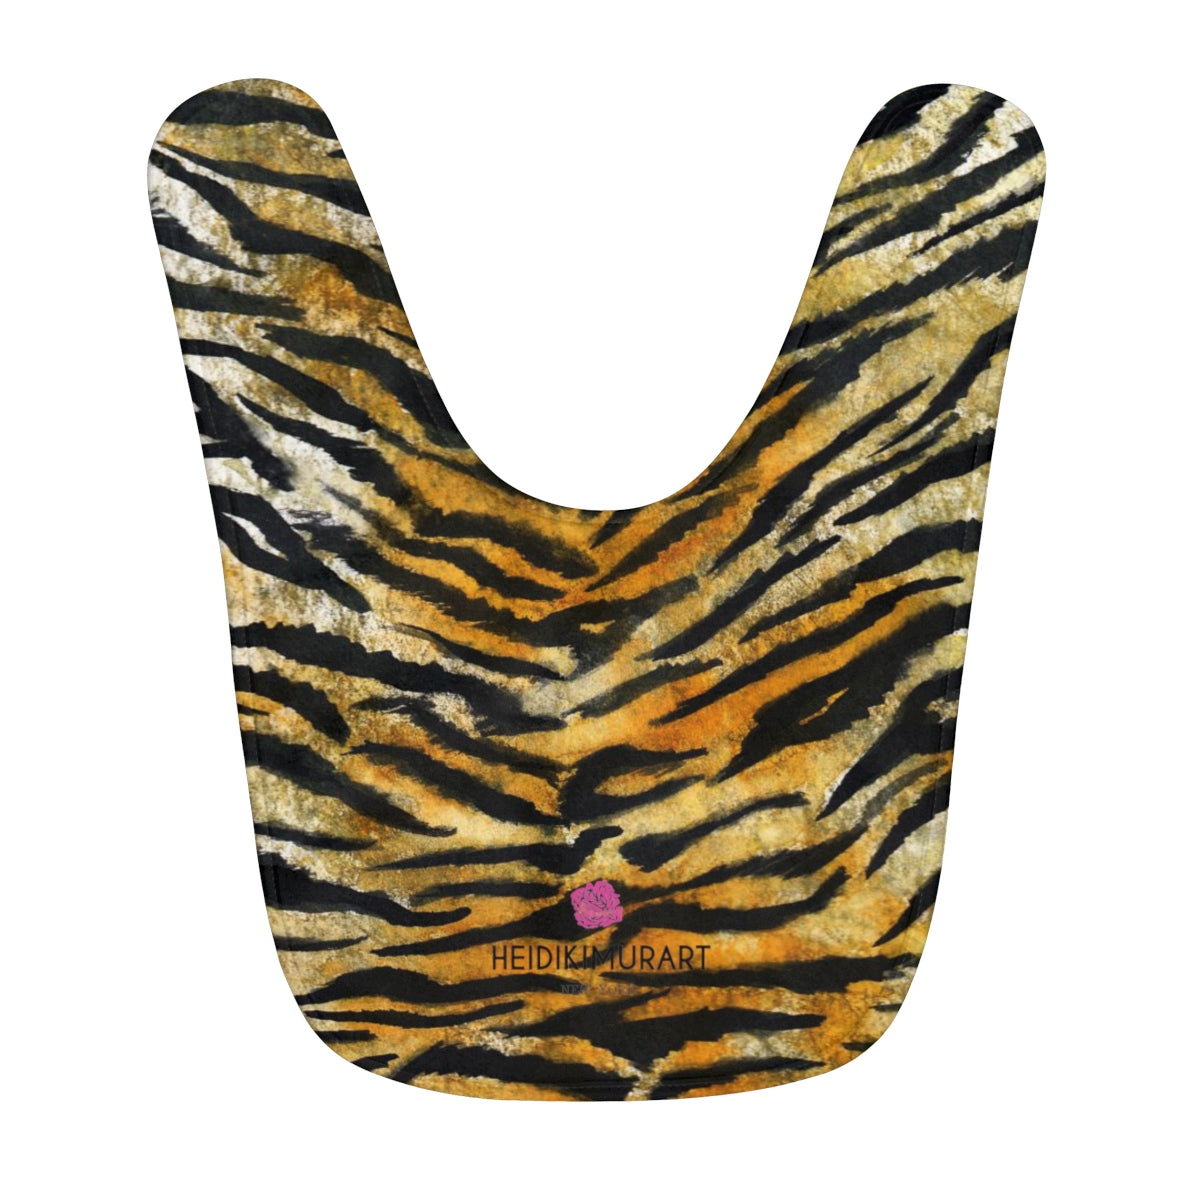 Orange Tiger Stripe Animal Print Cute Toddler Fleece Baby Bib - Made in USA-Kids clothes-One Size-Heidi Kimura Art LLC